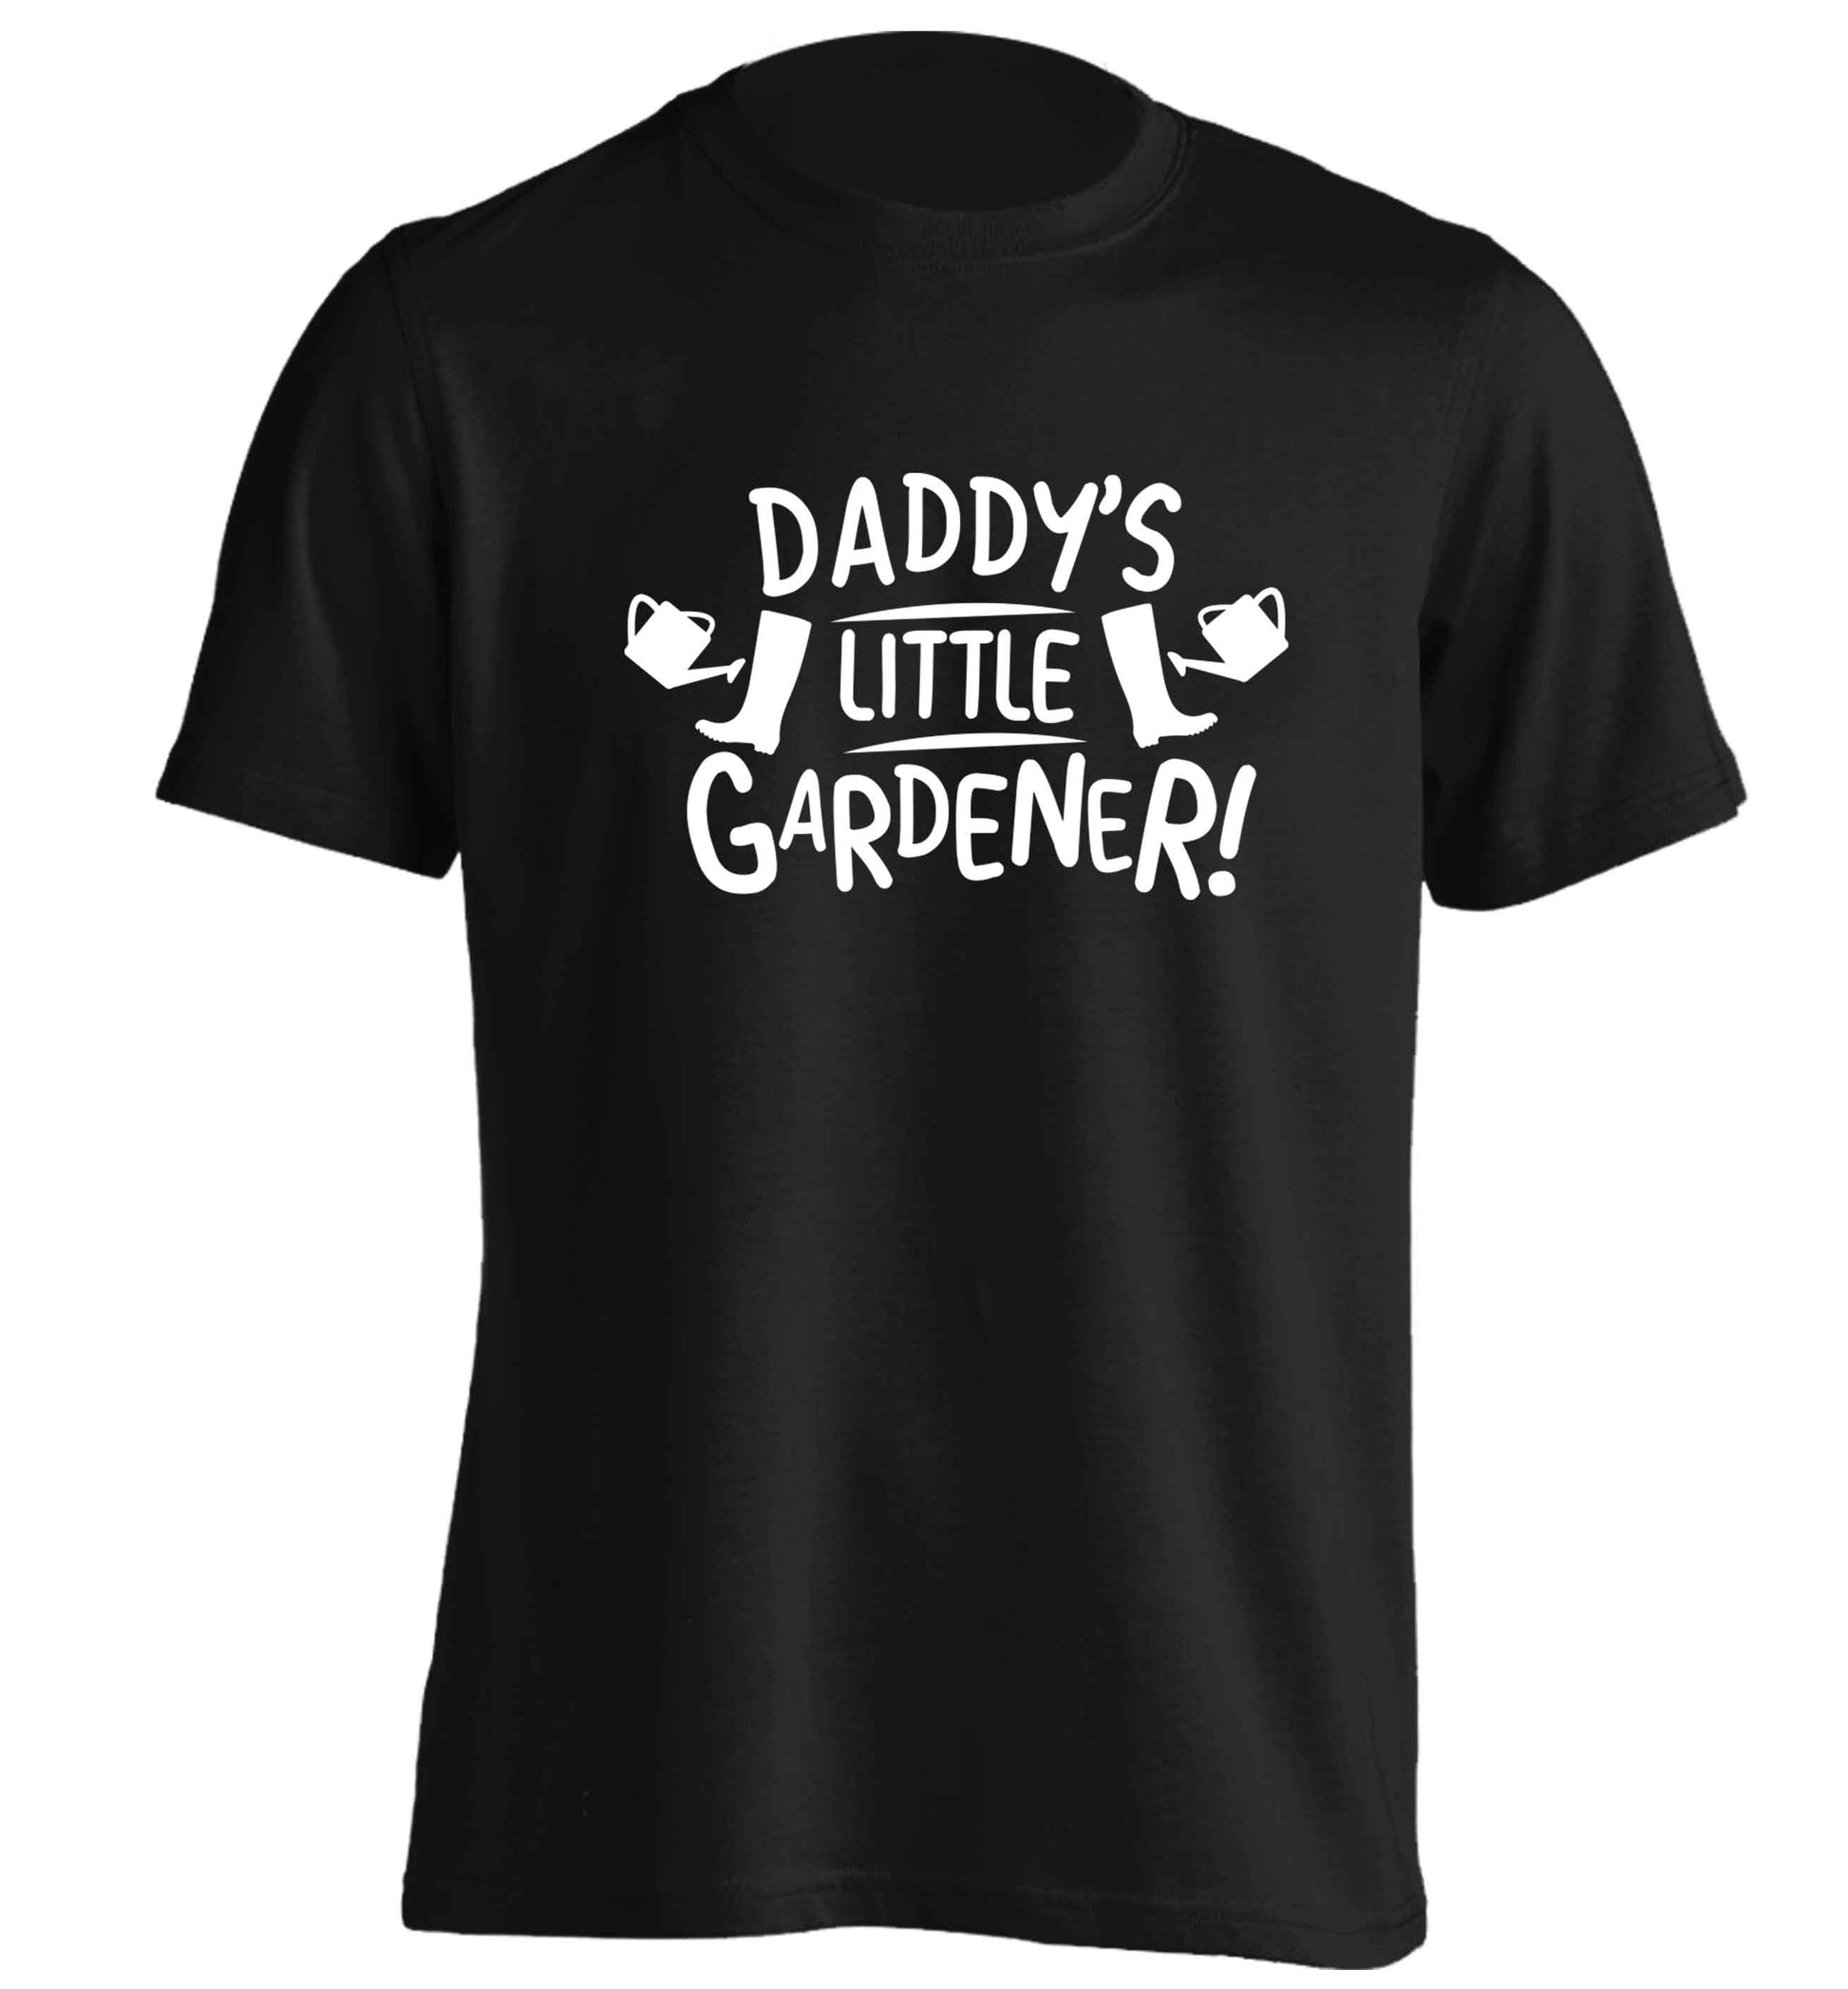 Daddy's little gardener adults unisex black Tshirt 2XL